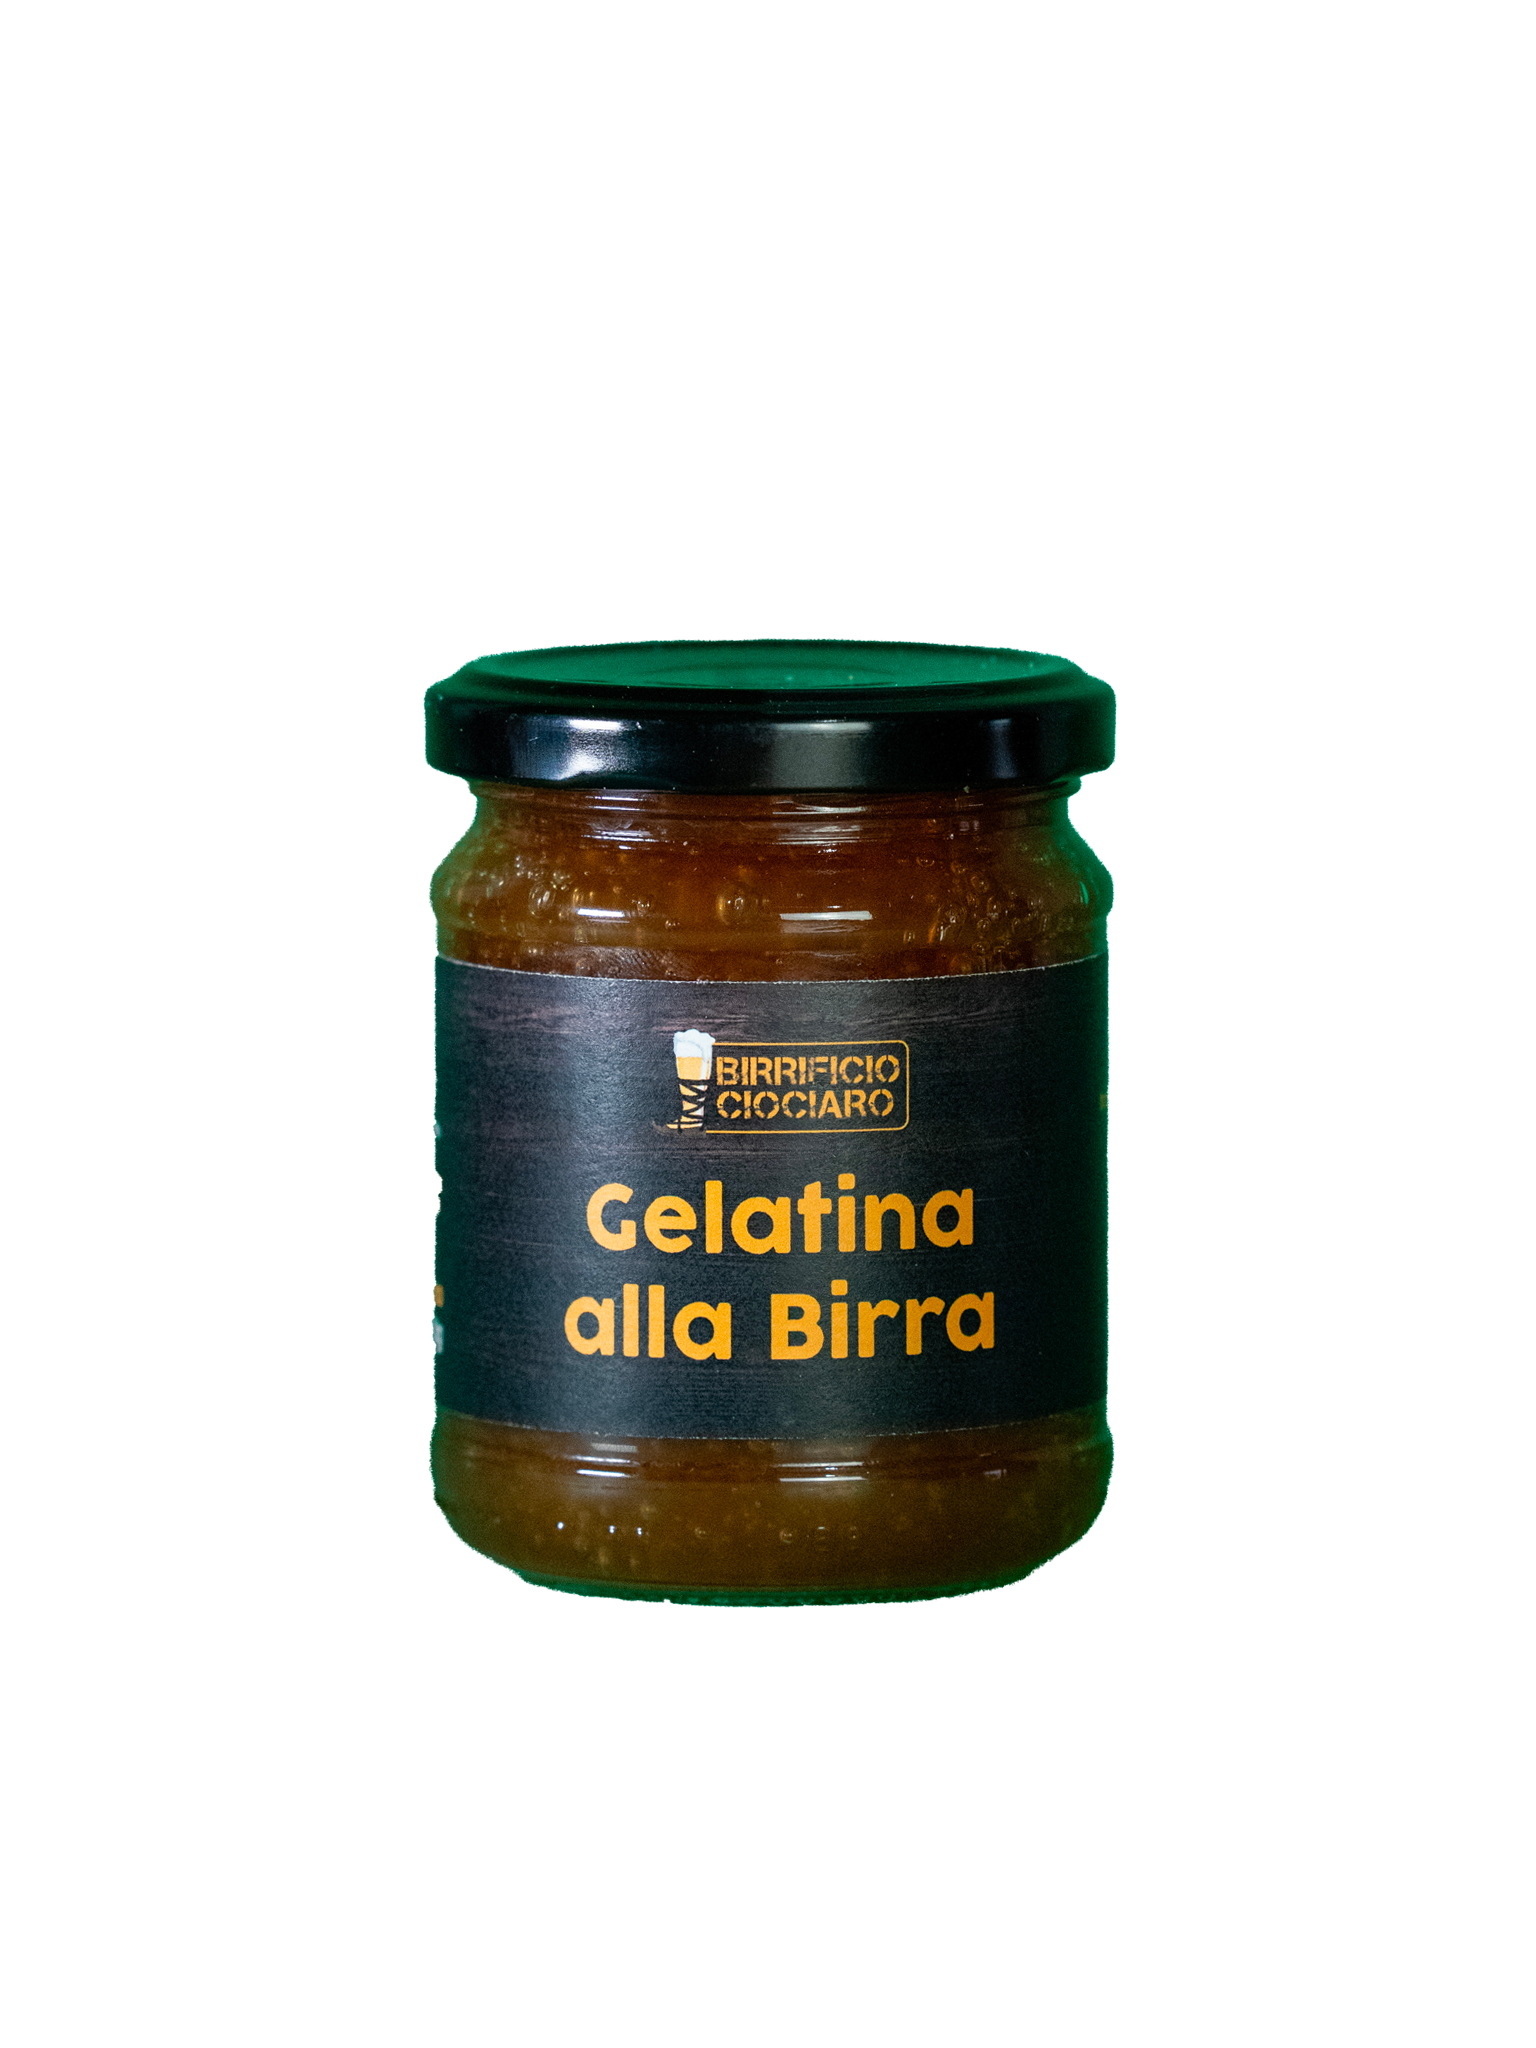 Featured image for “Gelatina alla birra”